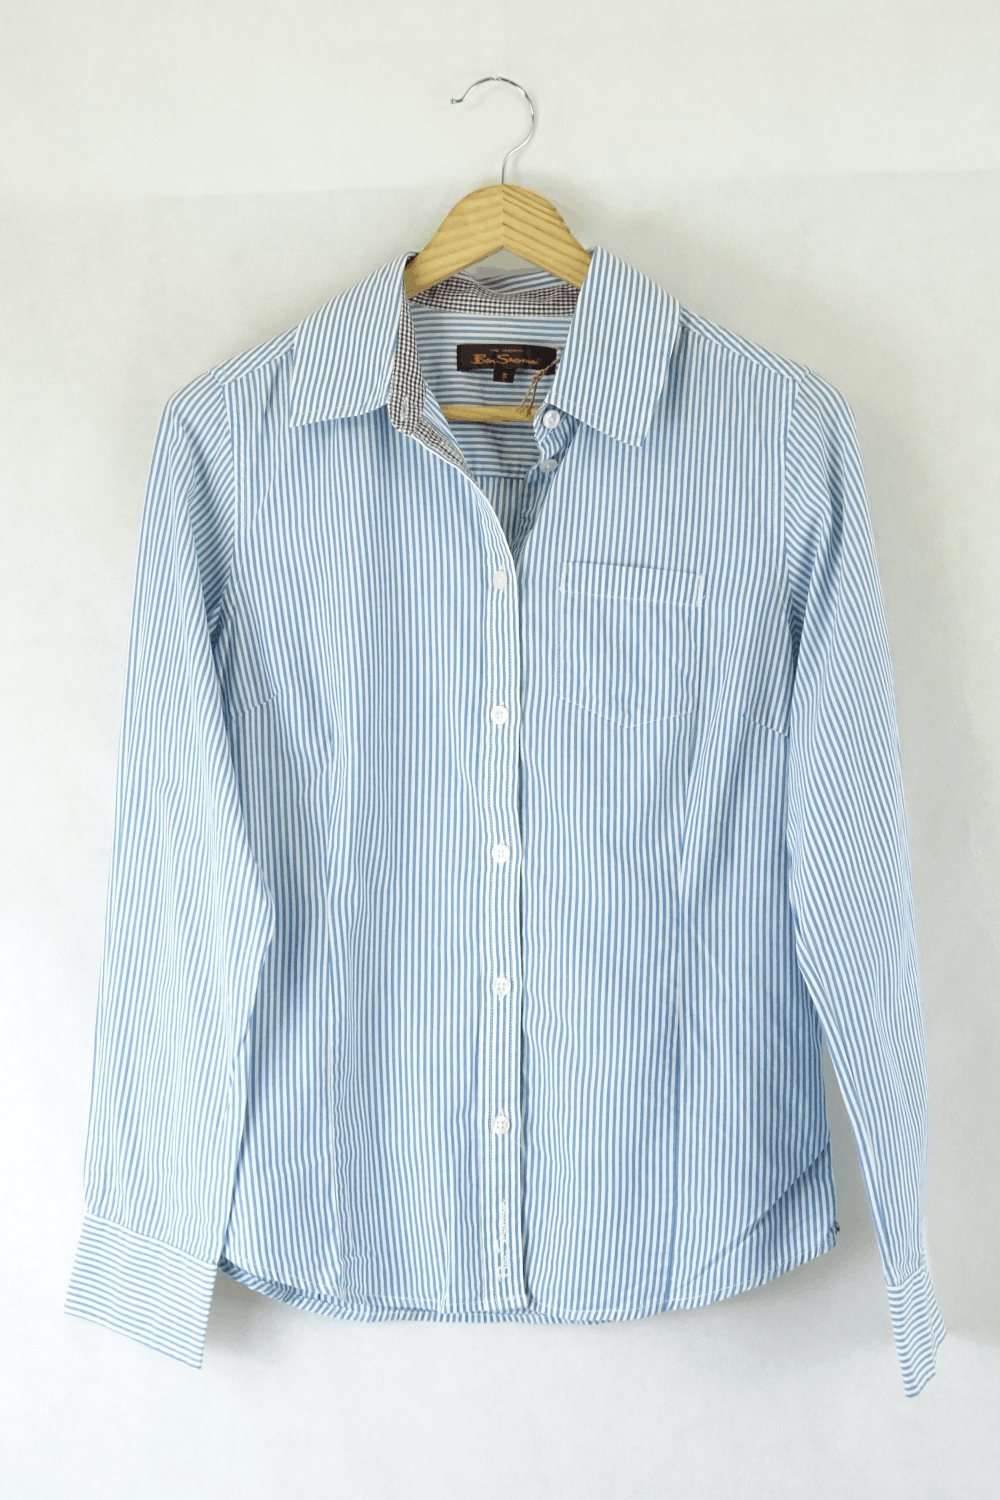 Ben Sherman Blue and White Stripe Long Sleeve Collar Shirt 8